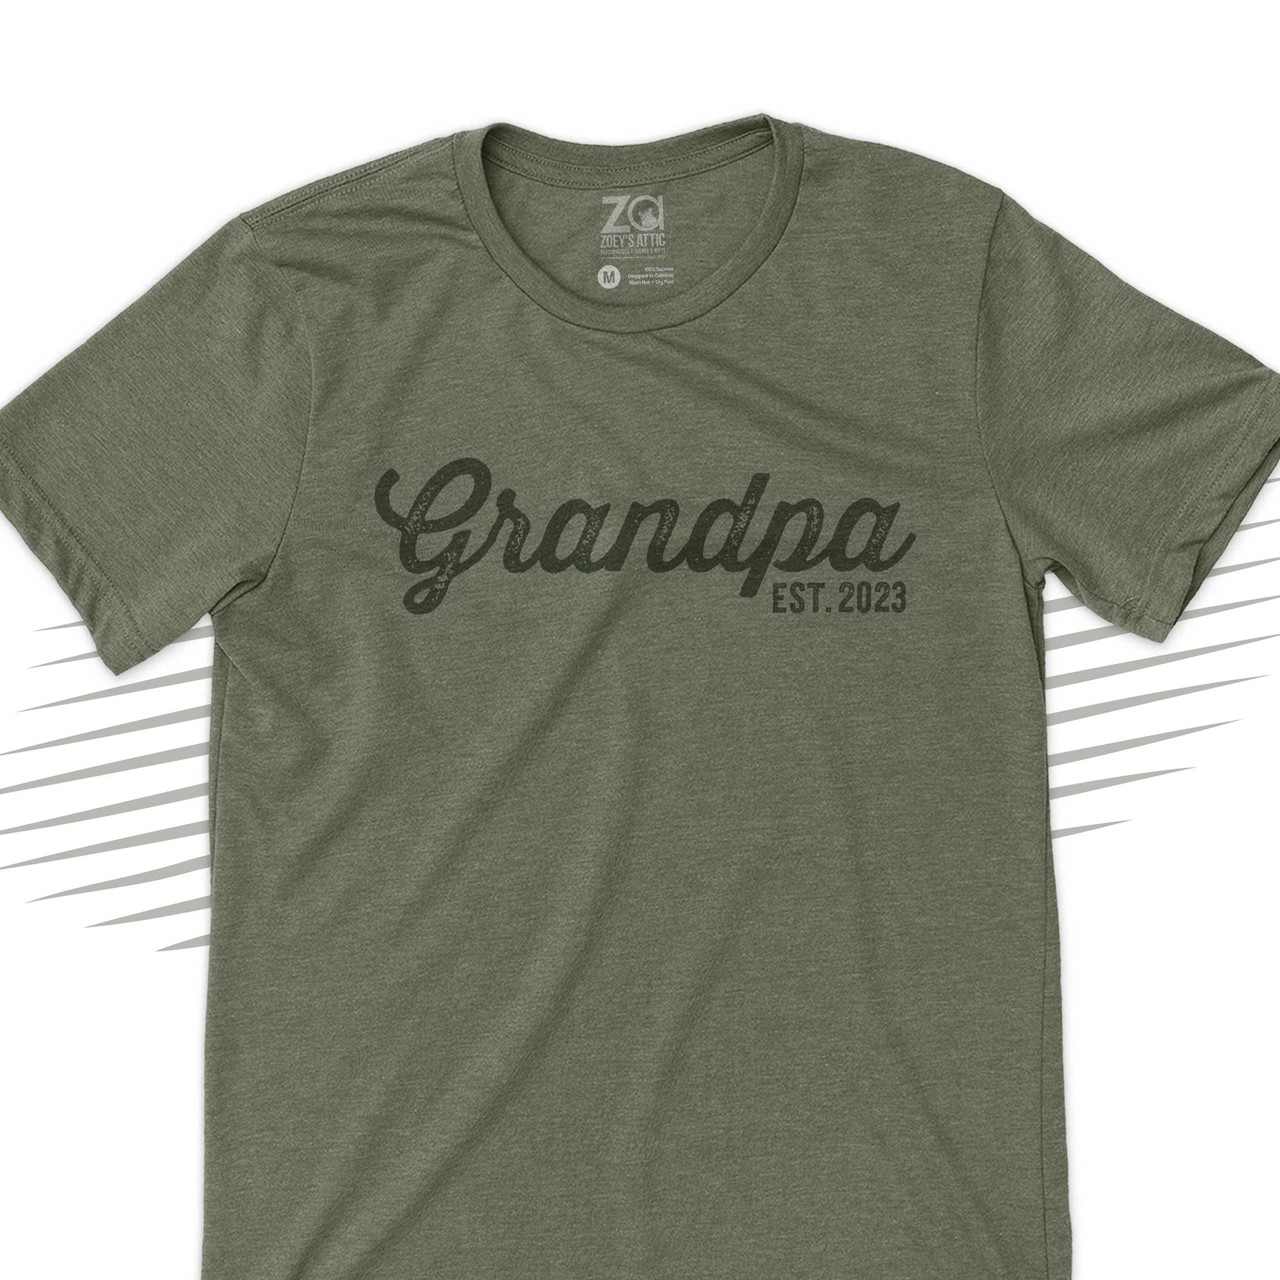 Grandpa Shirt Awesome Grandpa Tshirt T Shirt New Grandparent Granddad Grandfather Tshirts Fathers Day Gifts for Dad Christmas Gift Tshirt